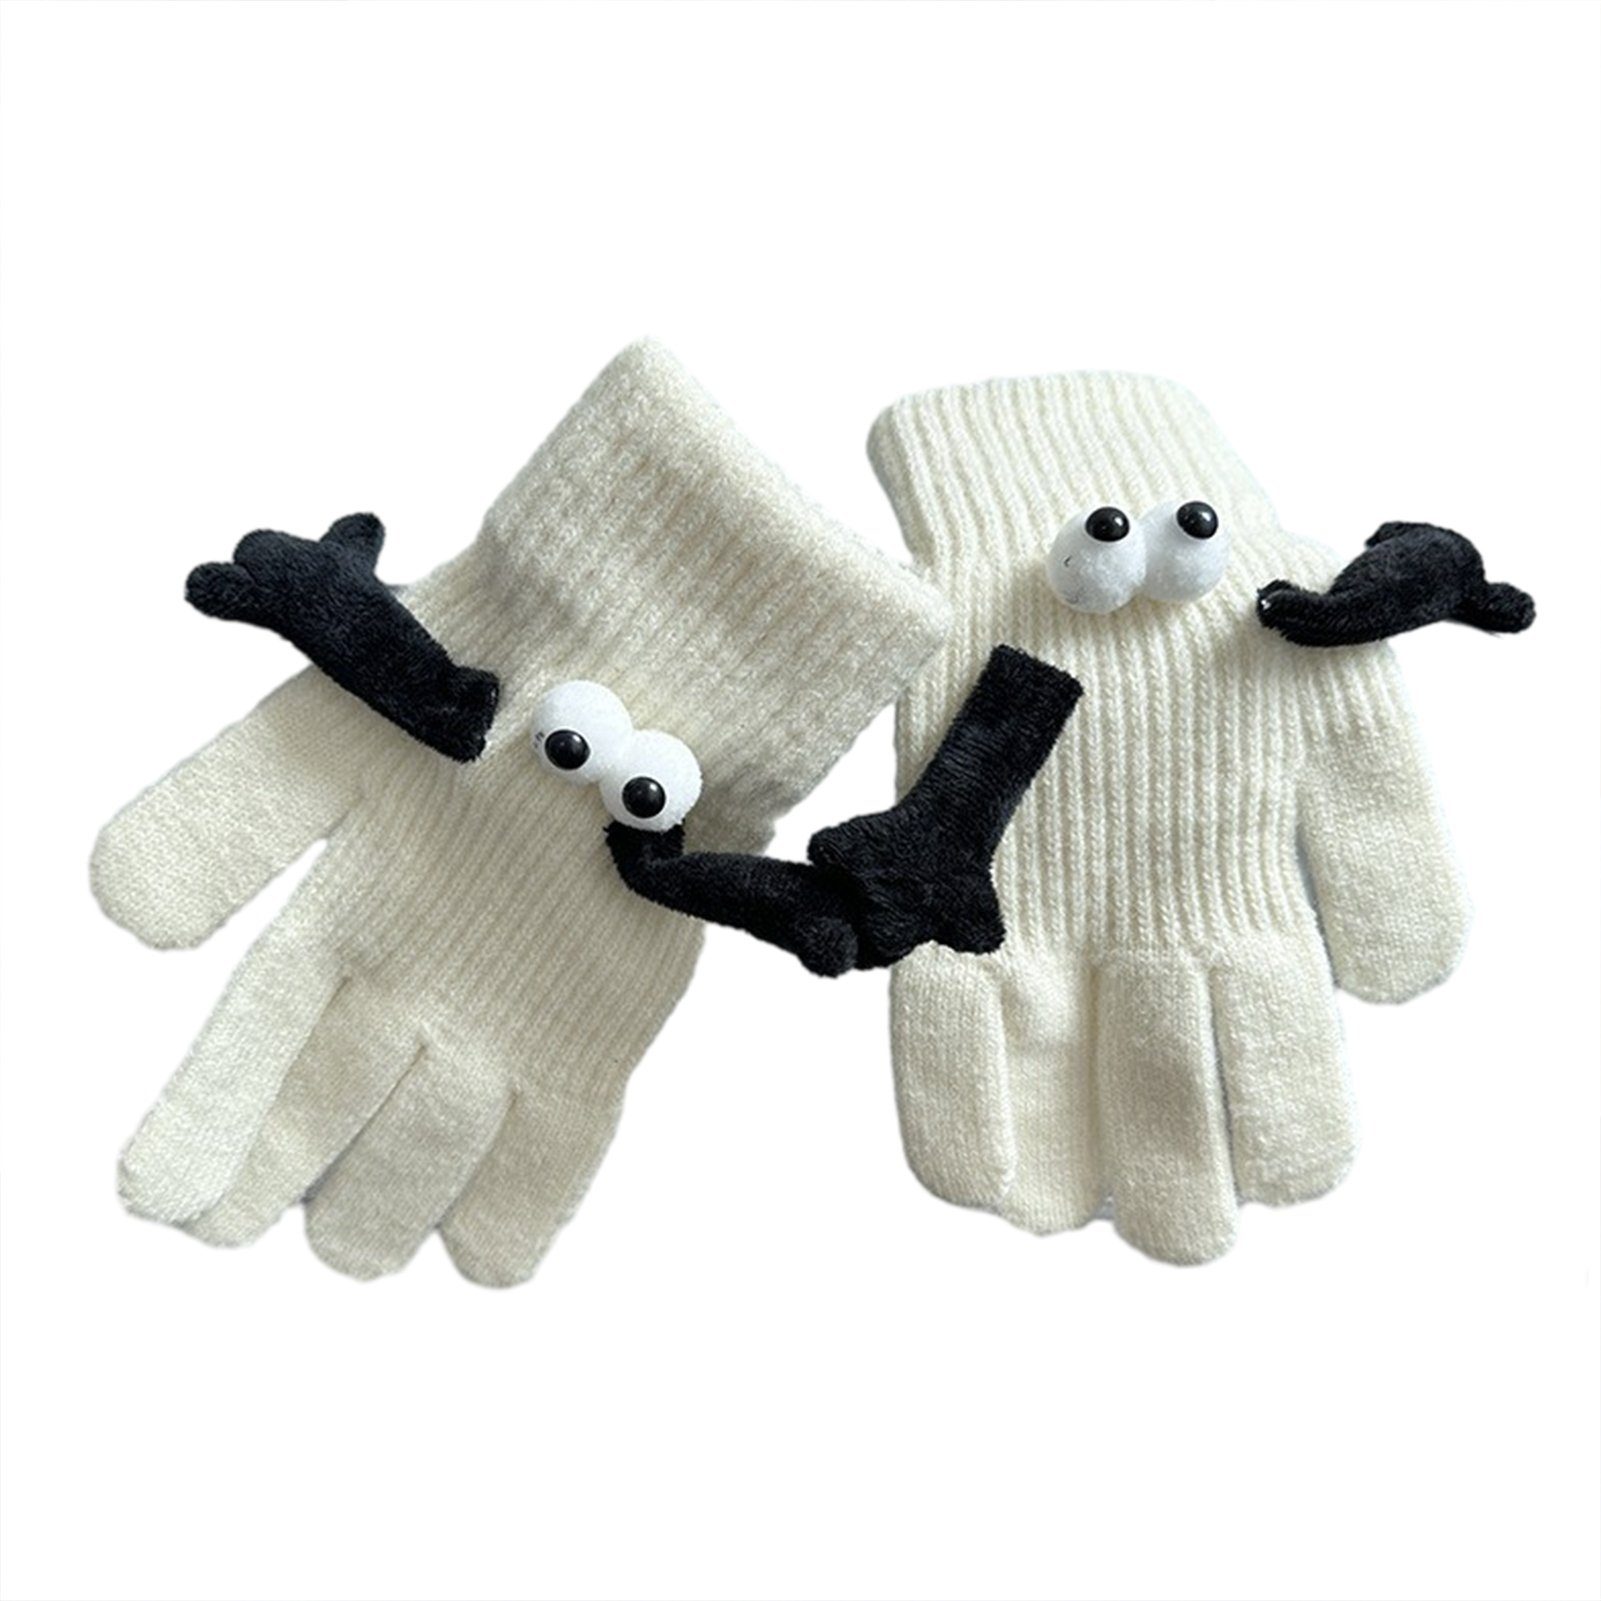 Blusmart Strickhandschuhe Warme Strickhandschuhe Mit Cartoon-Hand-in-Hand-Motiv, Bequem, Handschuhe beige XL